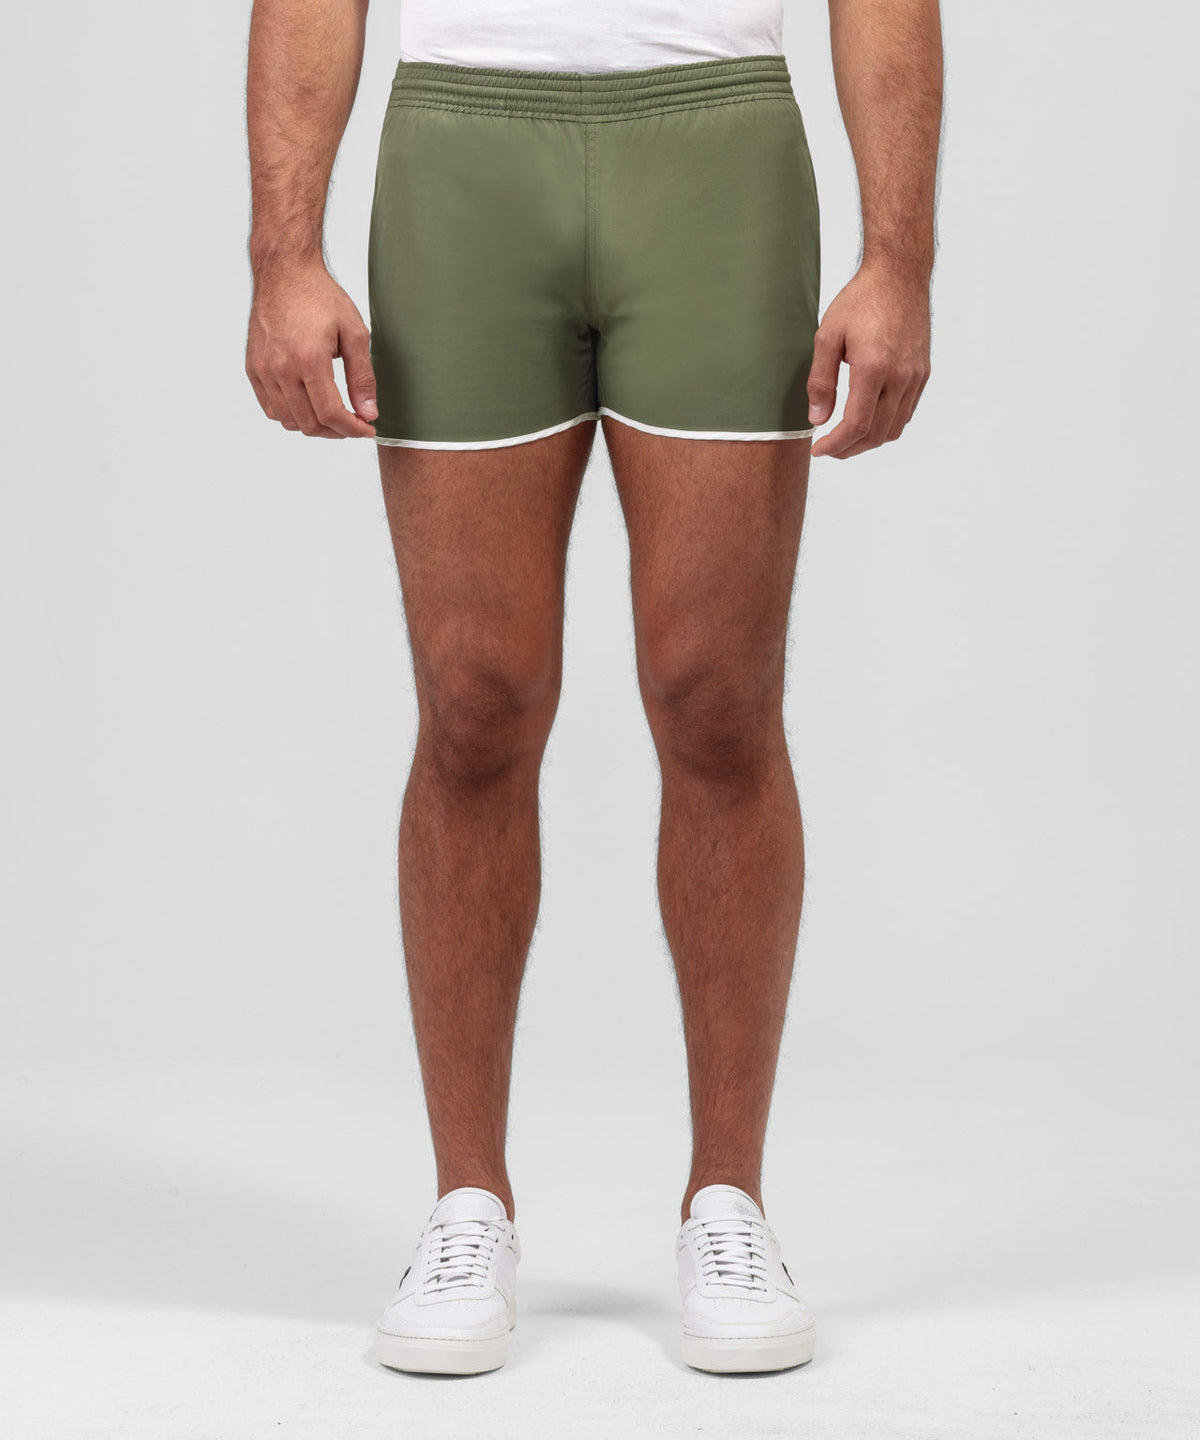 Marathon Exerciser Shorts: Olive Green